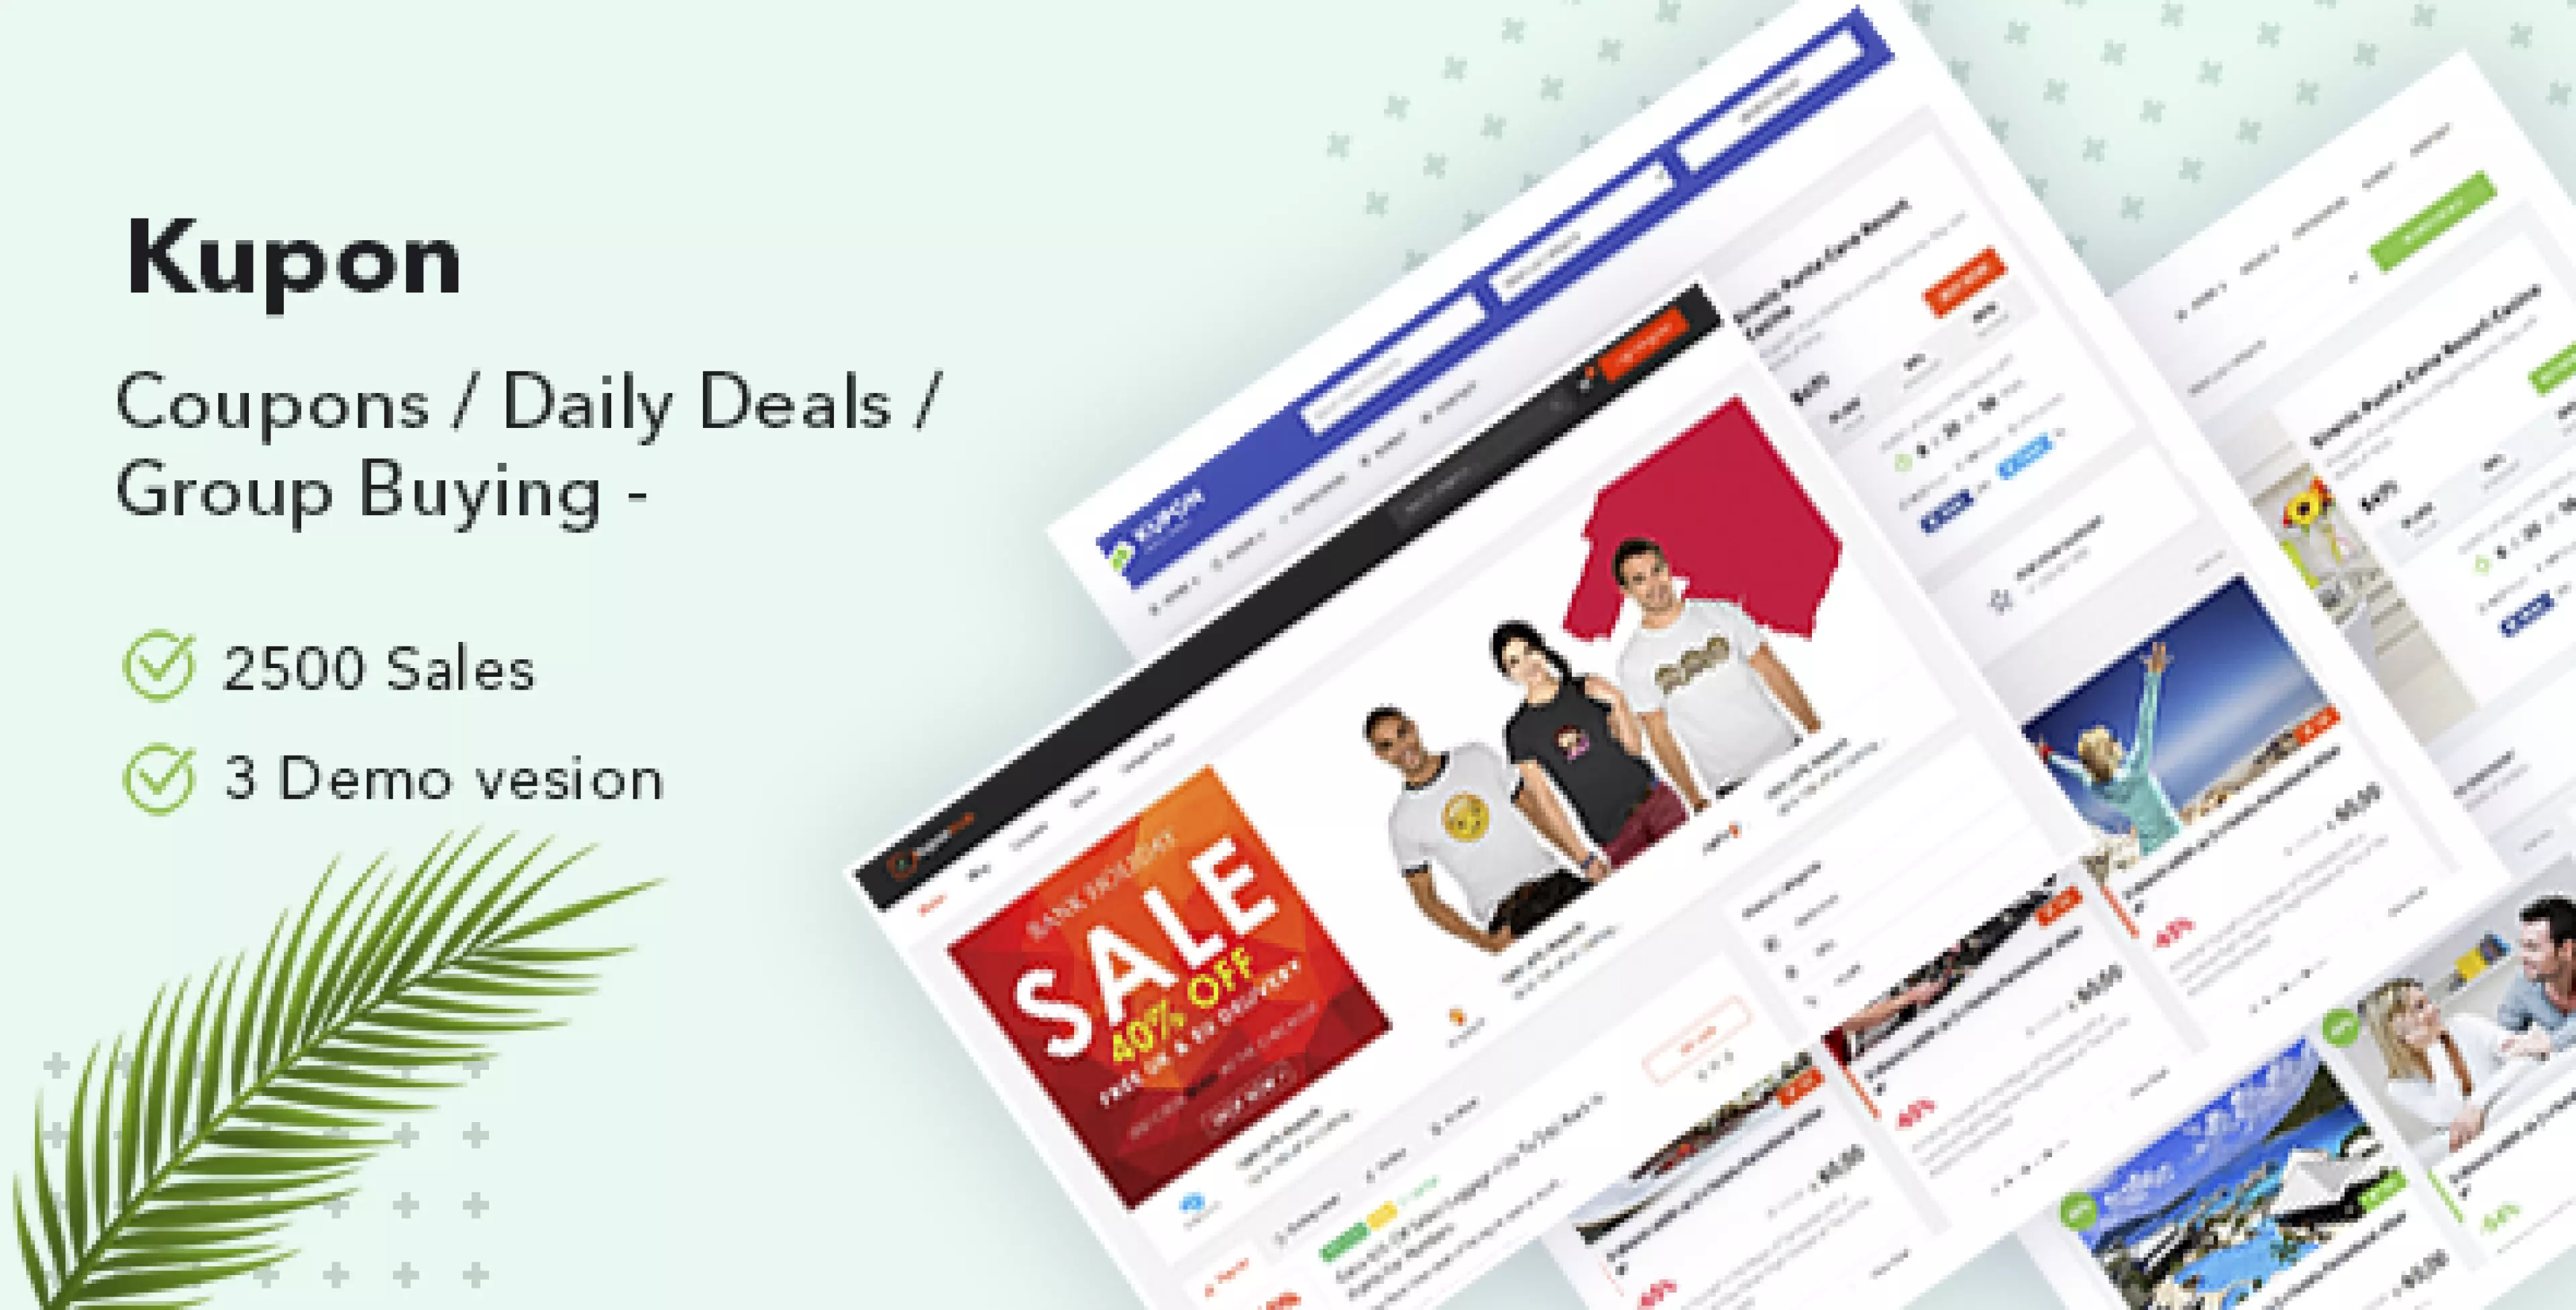 KUPON - Coupons / Daily Deals / Group Buying - Marketplace WordPress Theme 1.27